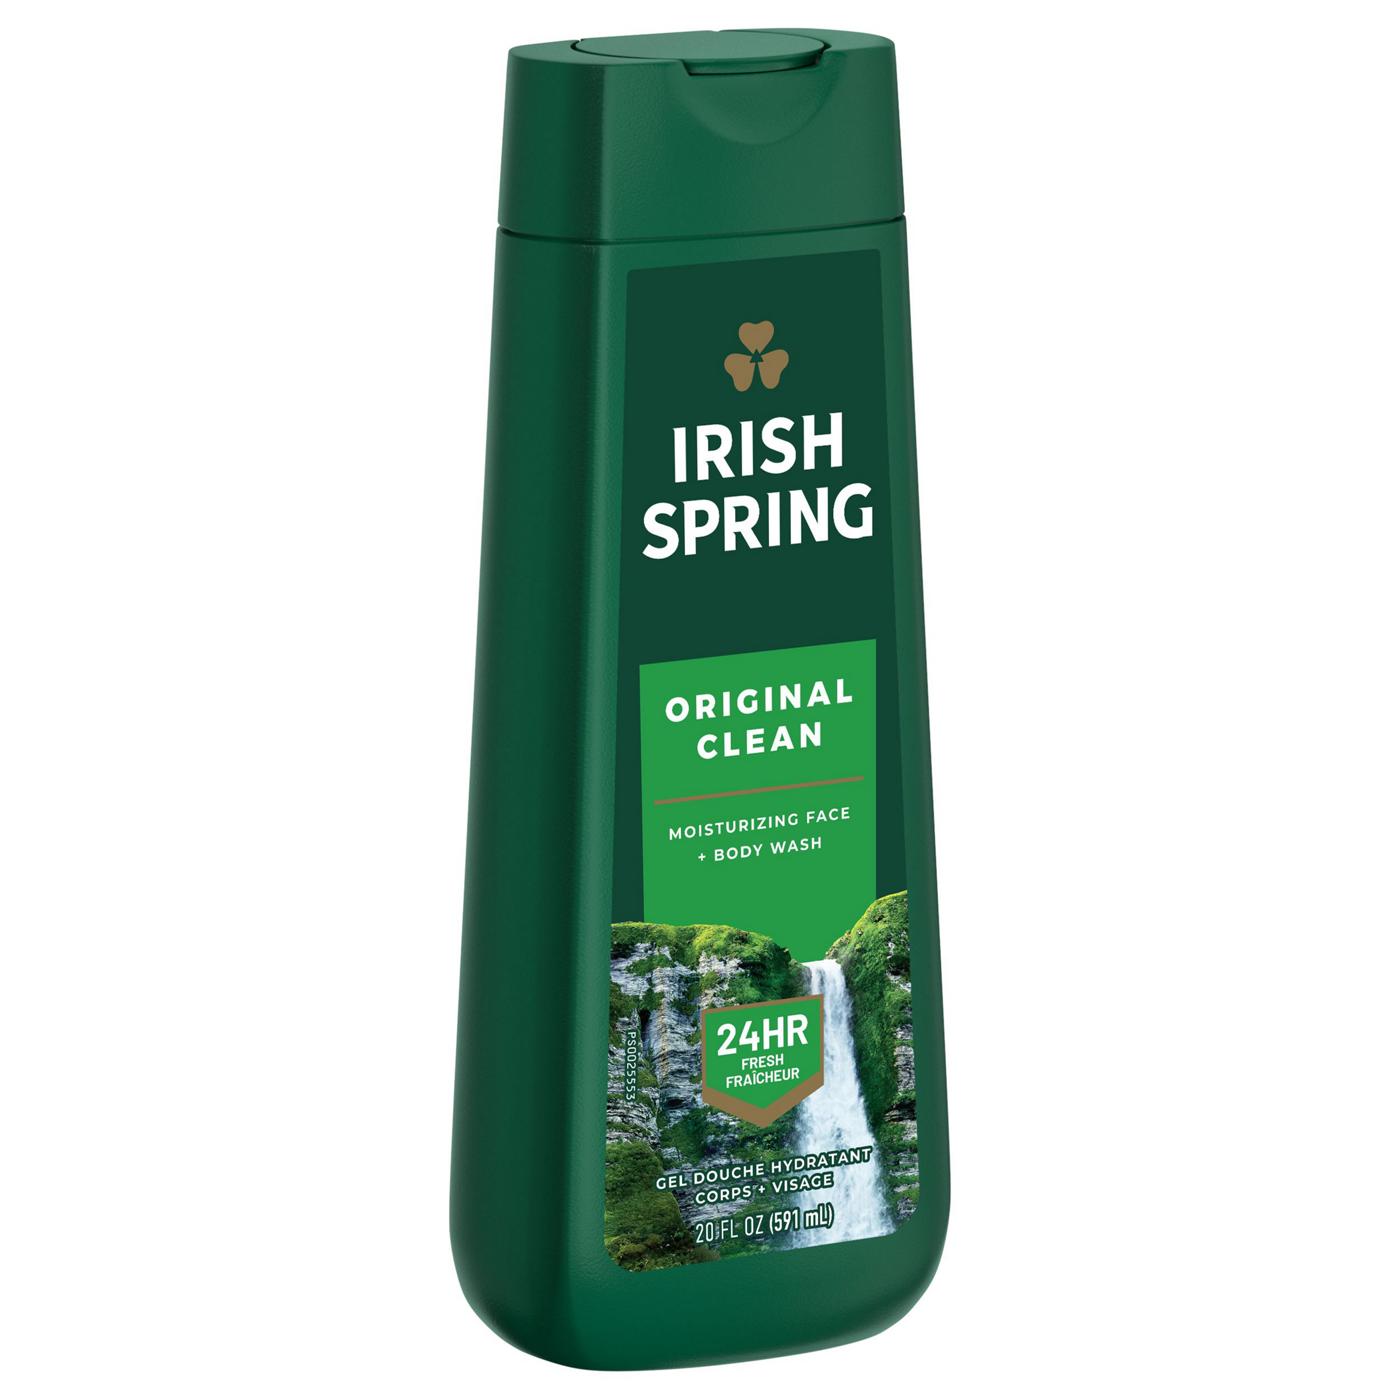 Irish Spring Moisturizing Face + Body Wash - Original Clean ; image 7 of 9